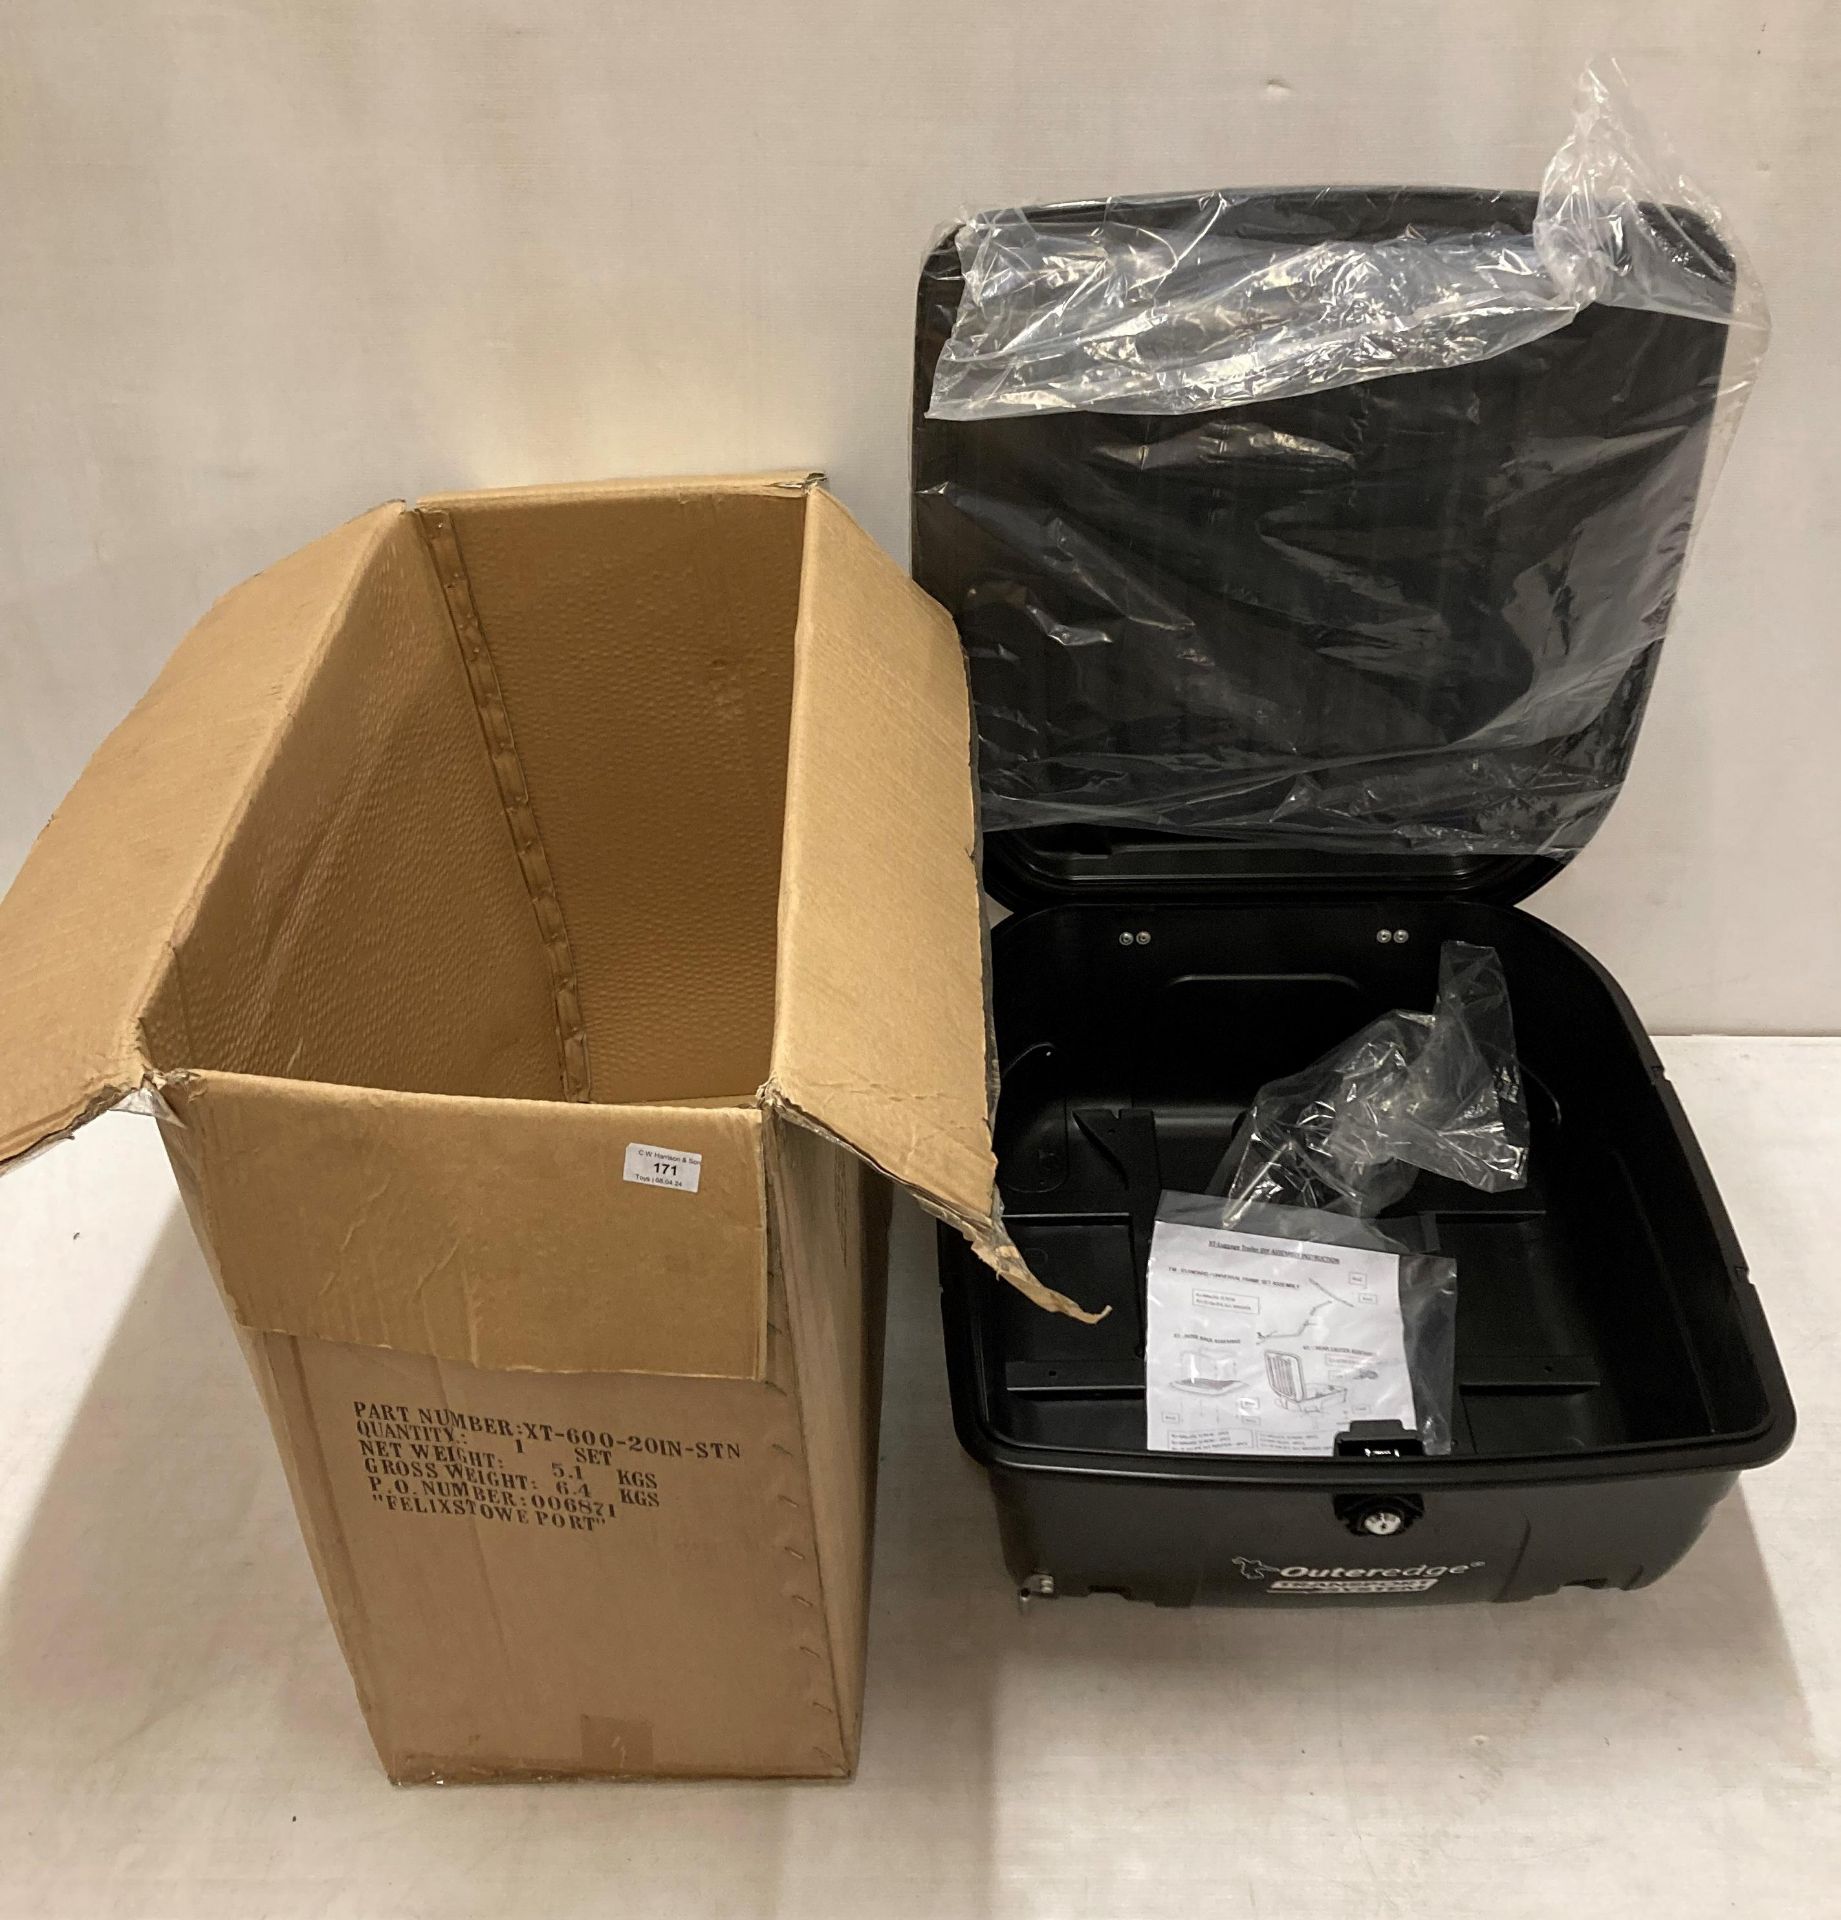 Outeredge Transport System roof rack luggage box (saleroom location: L06)